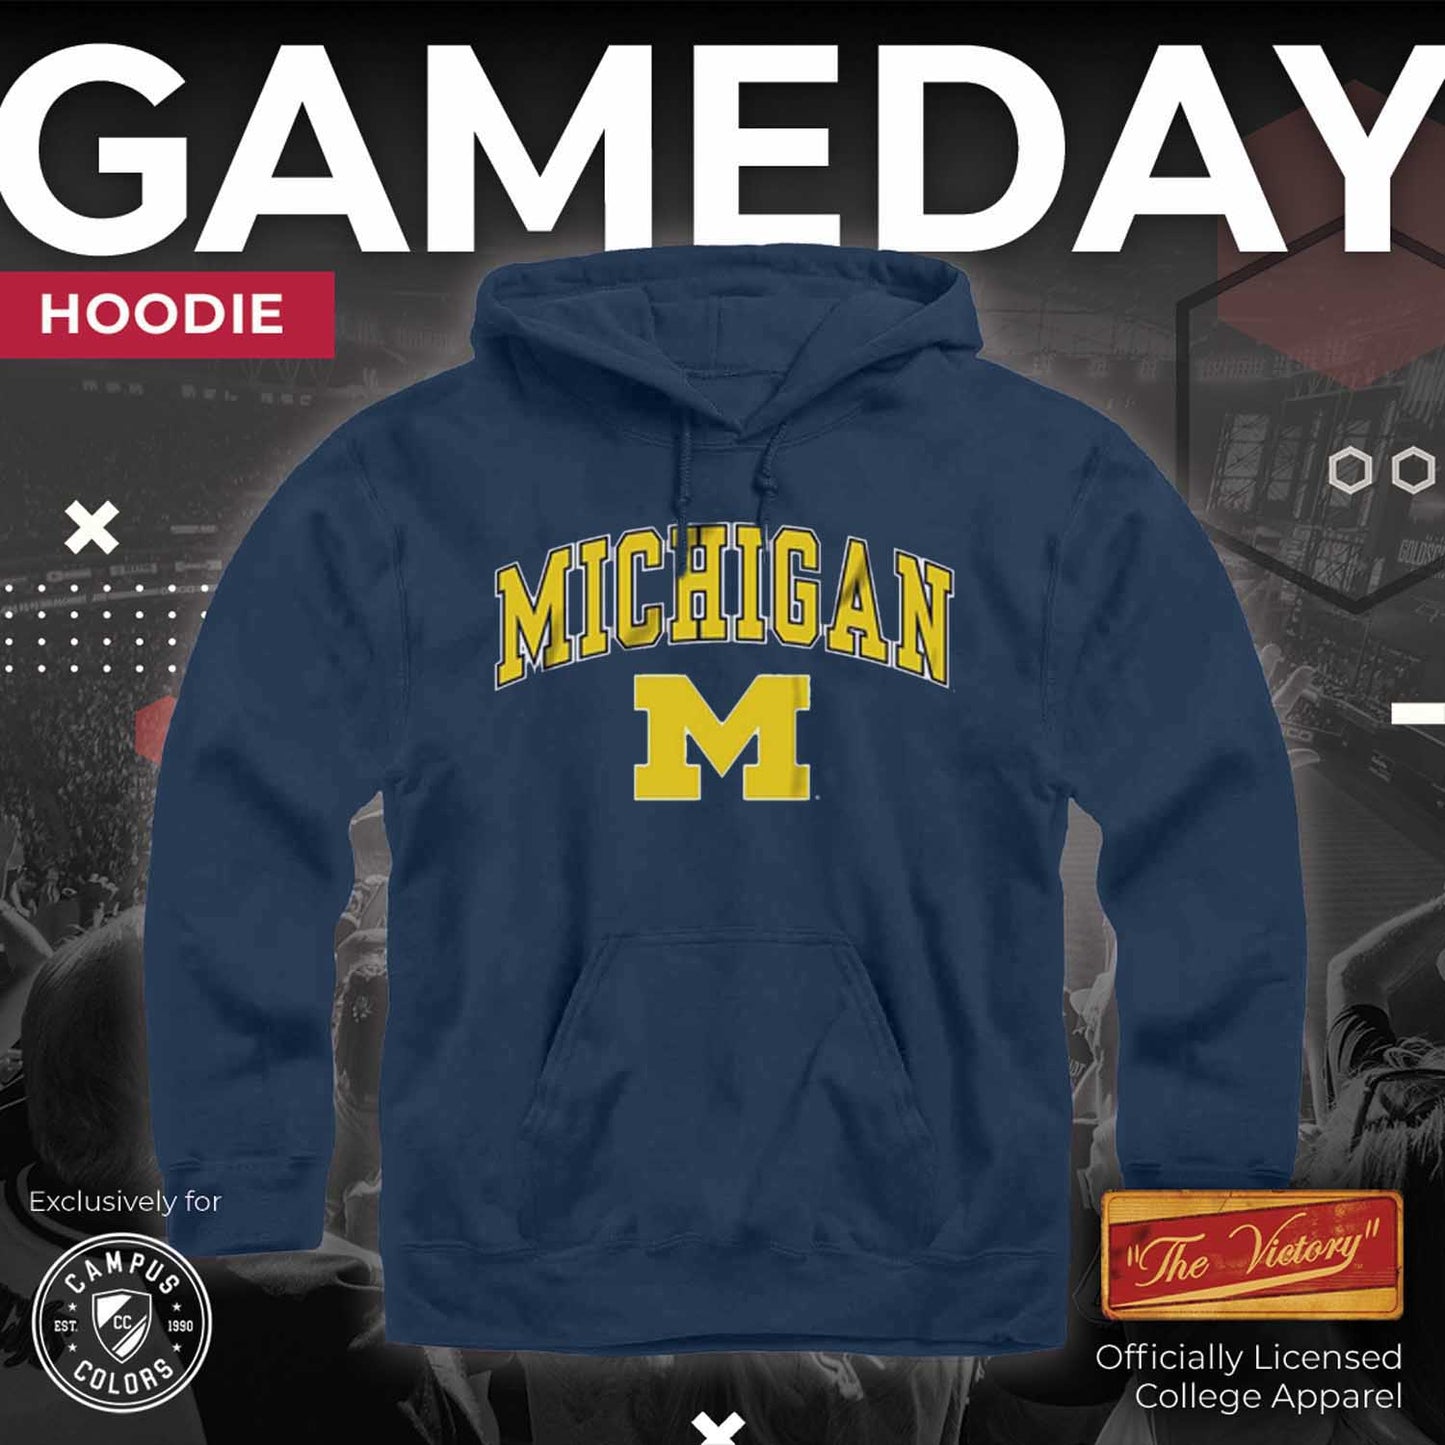 Michigan Wolverines Adult Arch & Logo Soft Style Gameday Hooded Sweatshirt - Navy